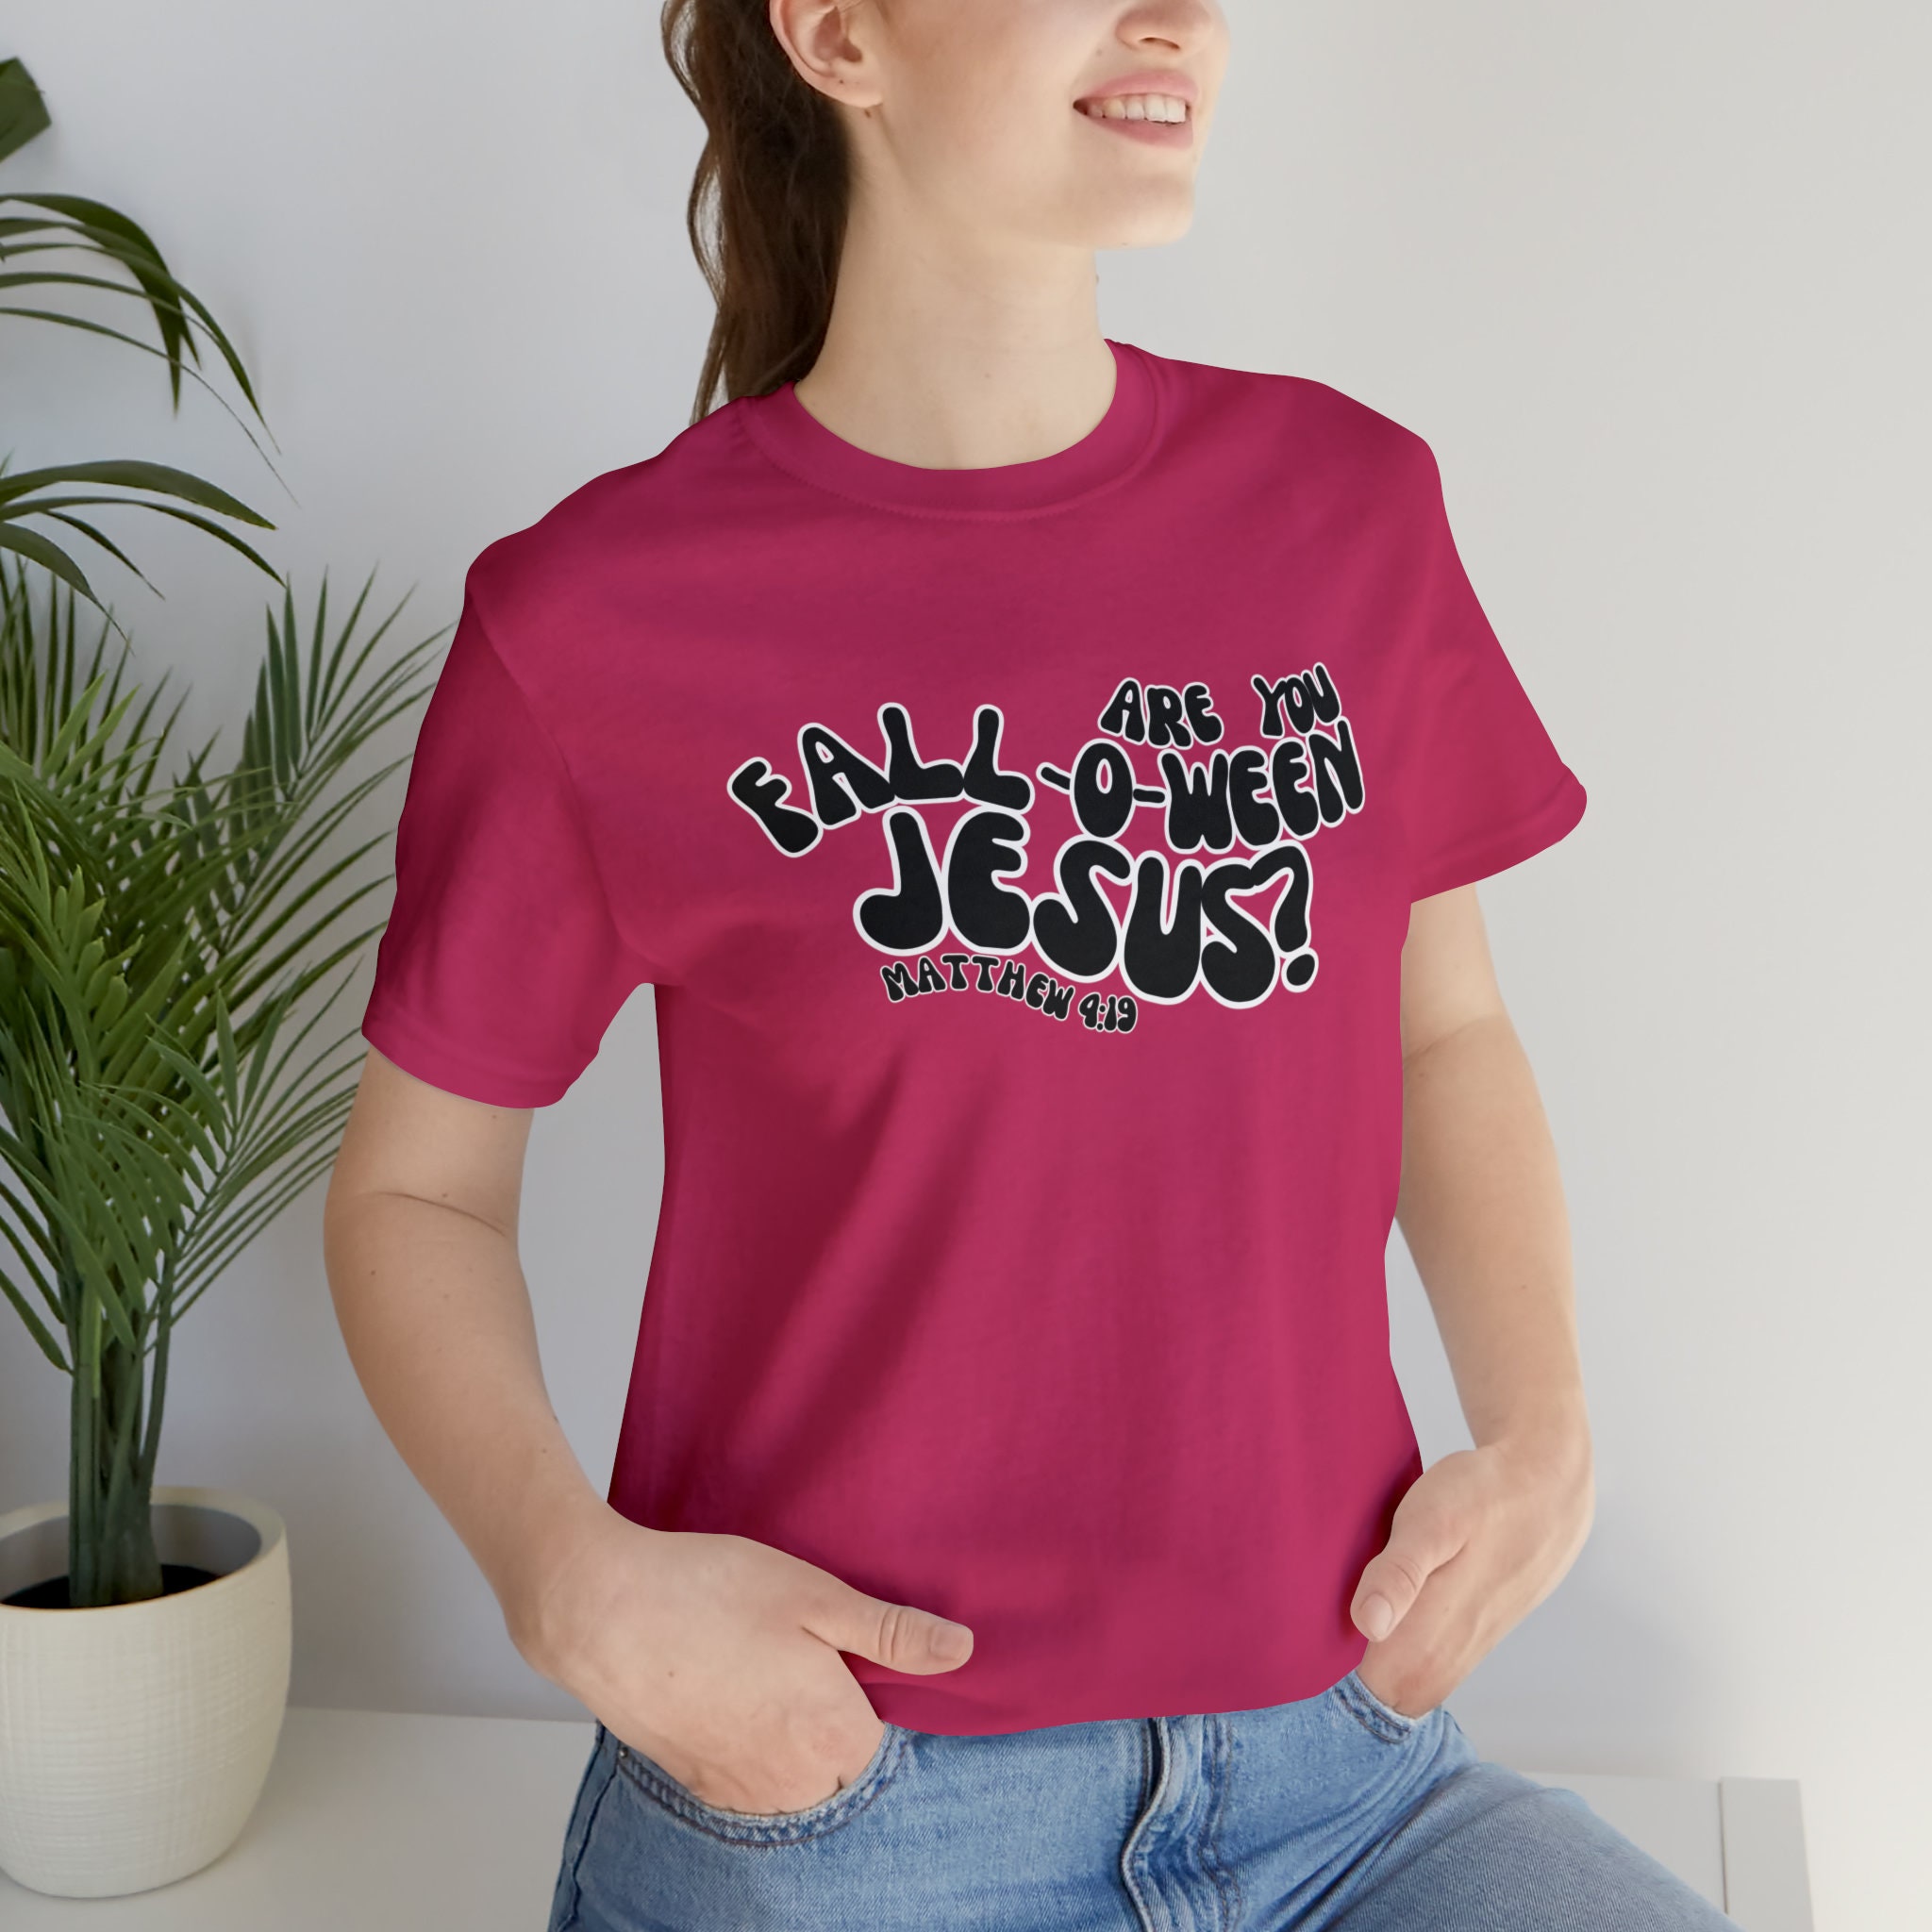 Discover Are you fall-o-ween Jesus Bella T-shirt|Fall-o-ween|Fall|Halloween|Jesus|Unisex Jersey Short Sleeve Tee|Halloween Tees|Jesus Tees